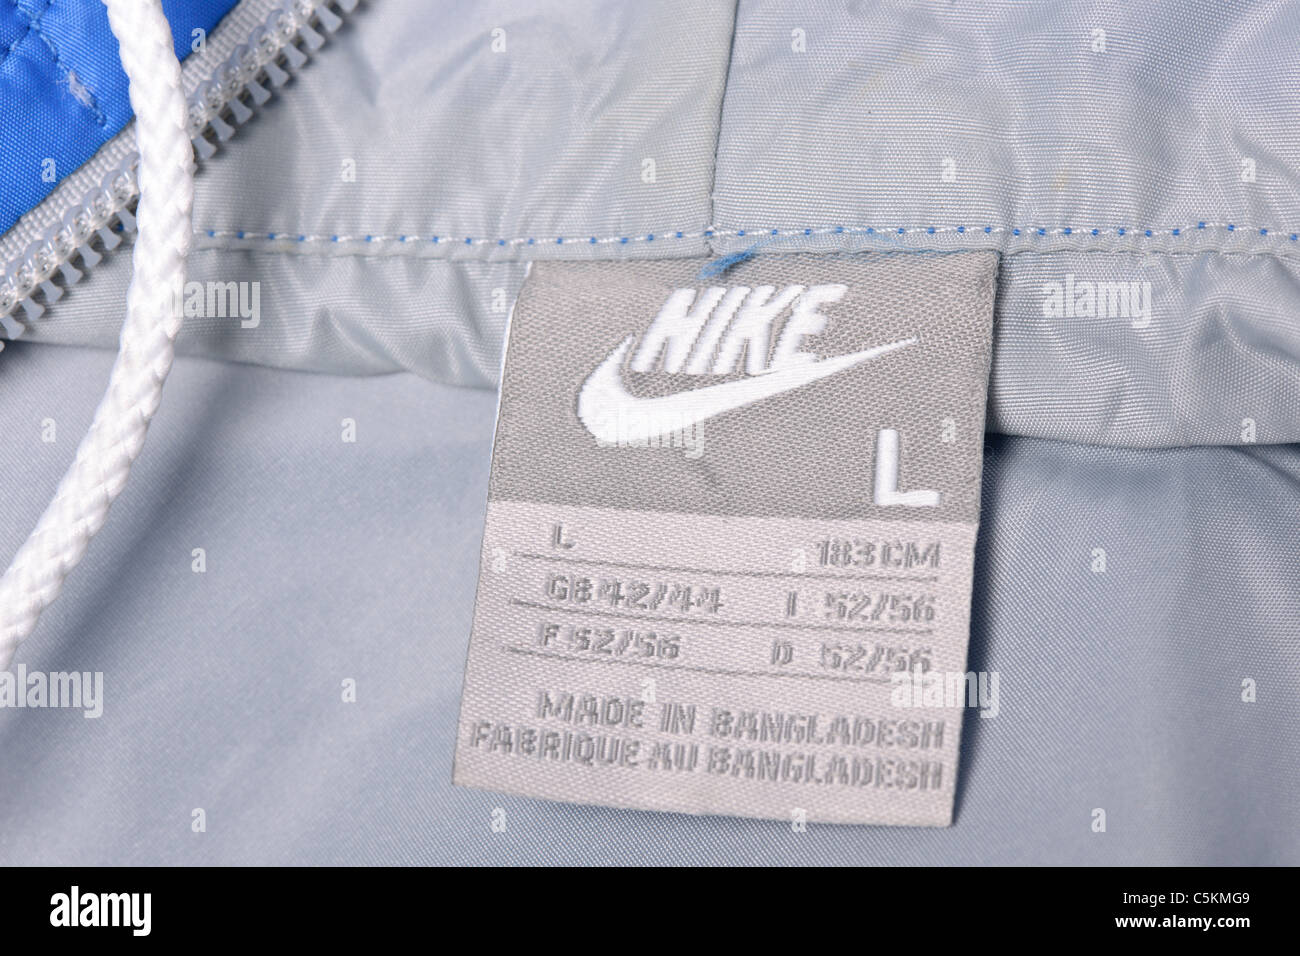 Men's Nike Windrunner jacket in blue/grey clothing wash care label detail Stock Photo